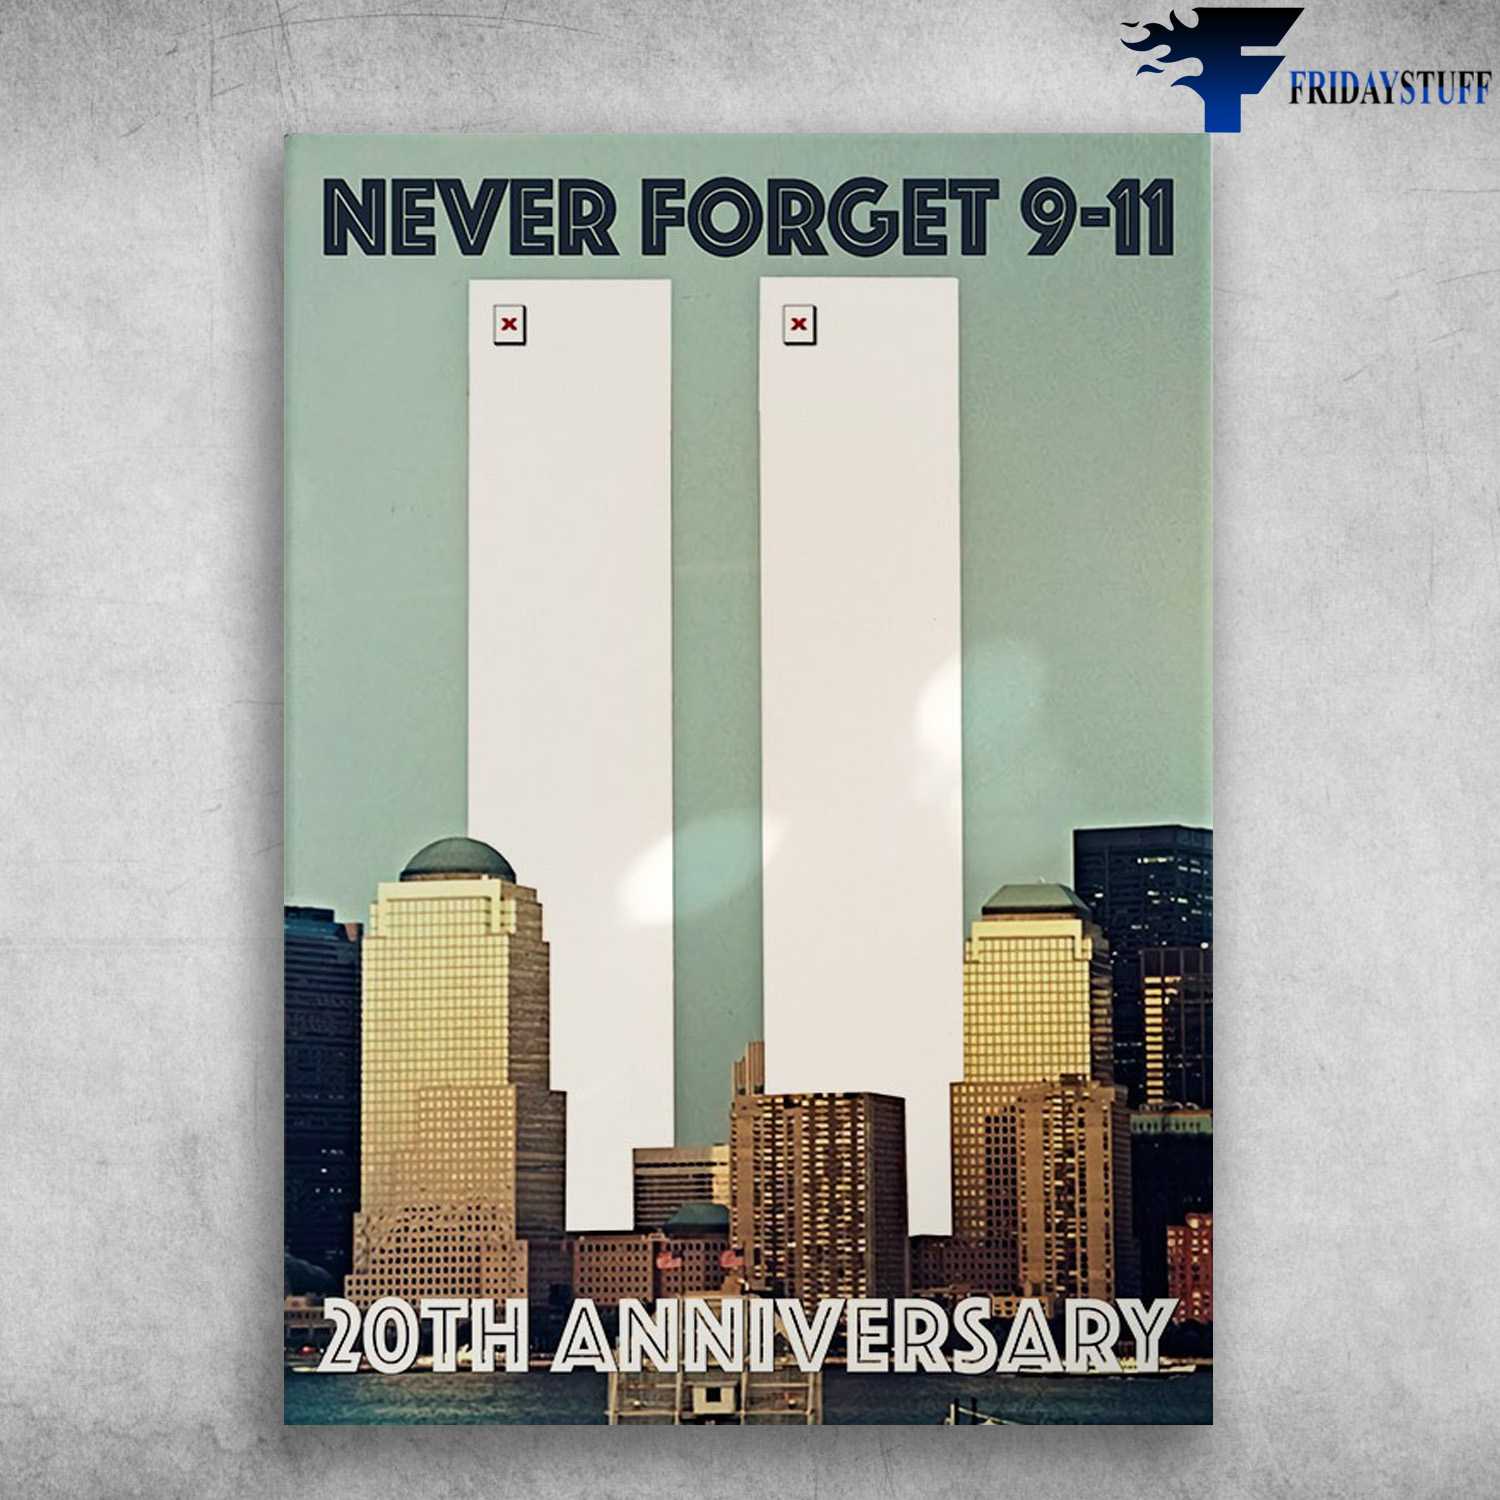 September 11 Attacks Never Forget 9 11 20th Anniversary Fridaystuff